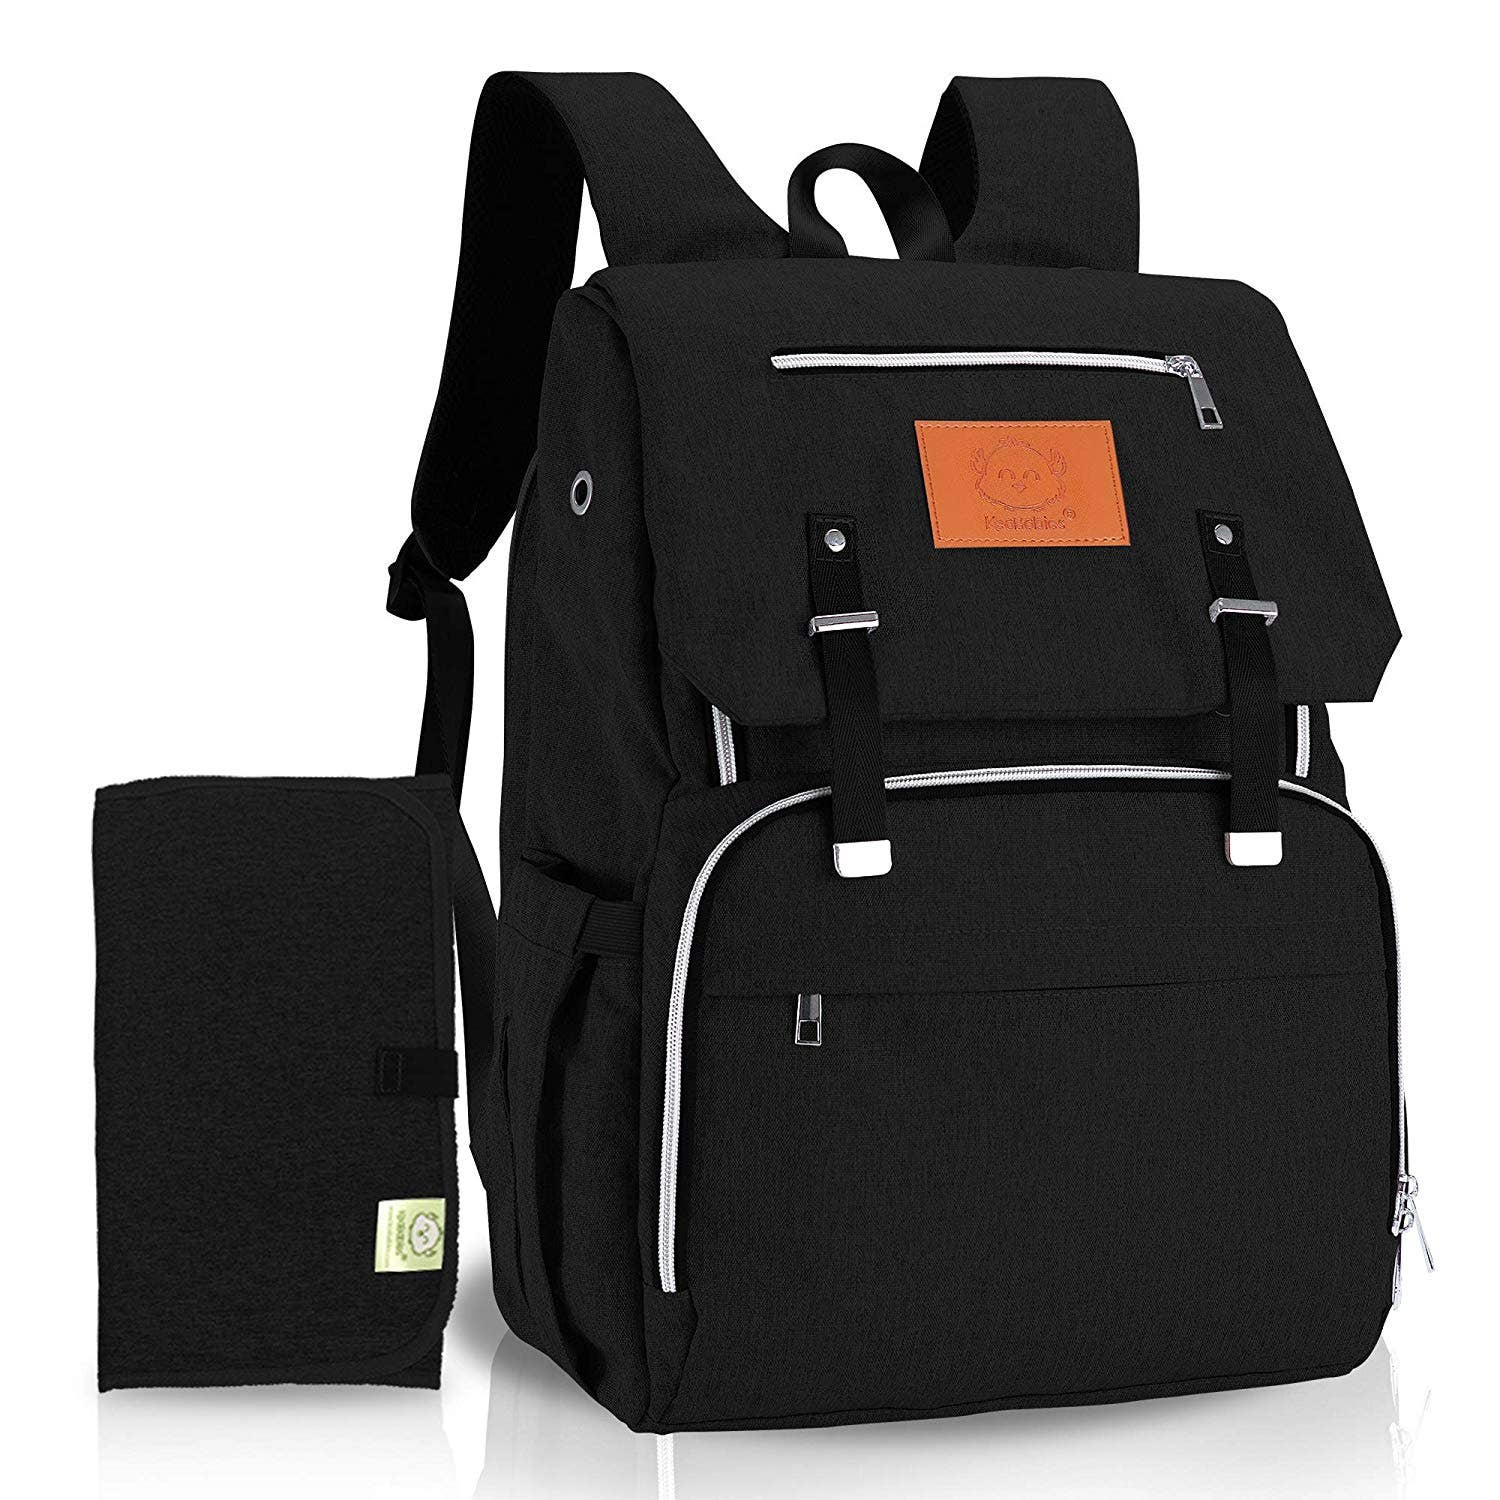 KeaBabies Explorer Diaper Backpack - Black